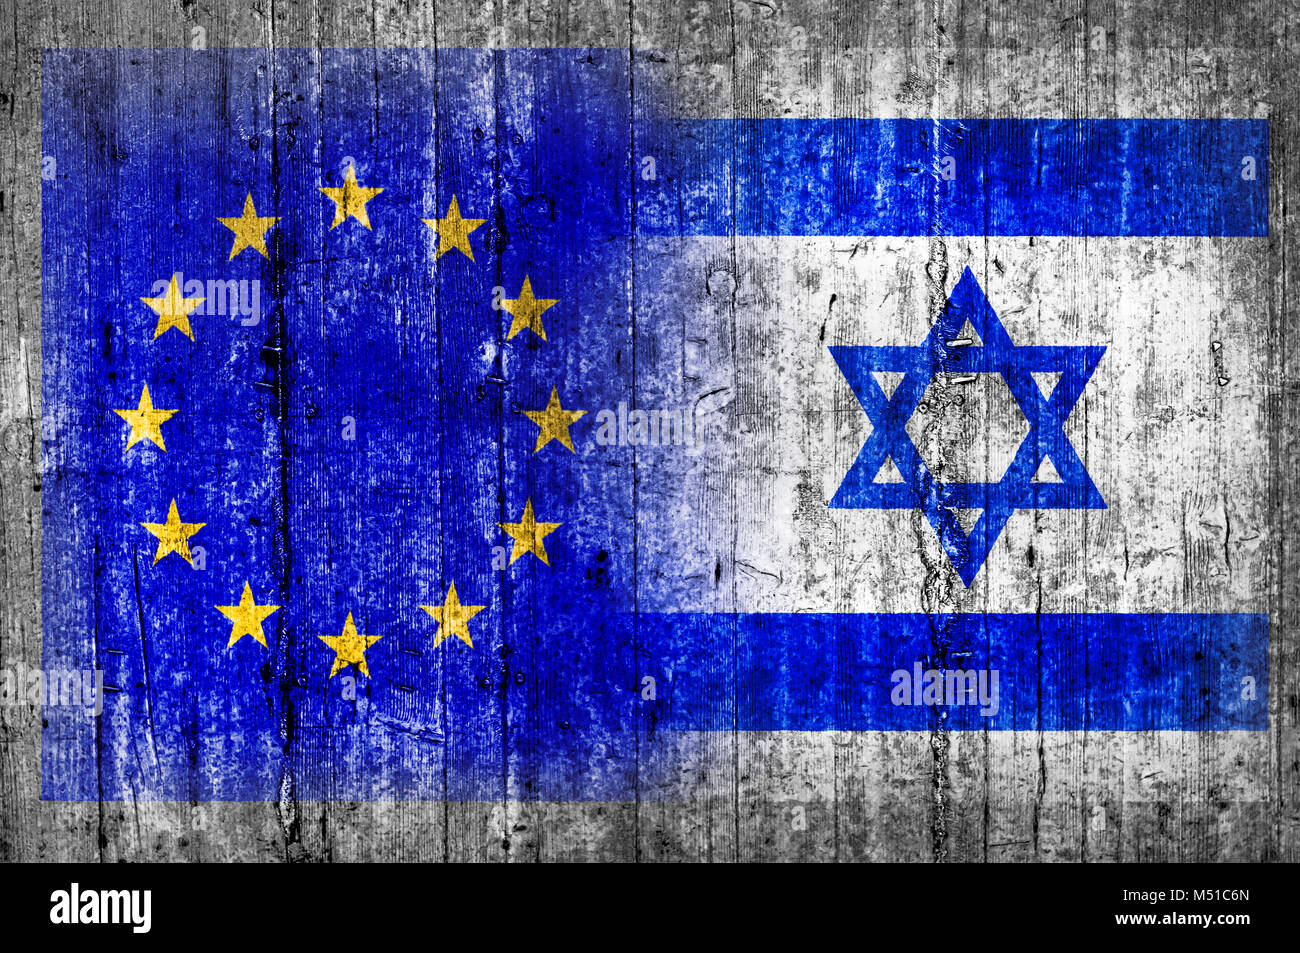 Nato israel flagge Fotos und Bildmaterial in hoher Auflösung Alamy